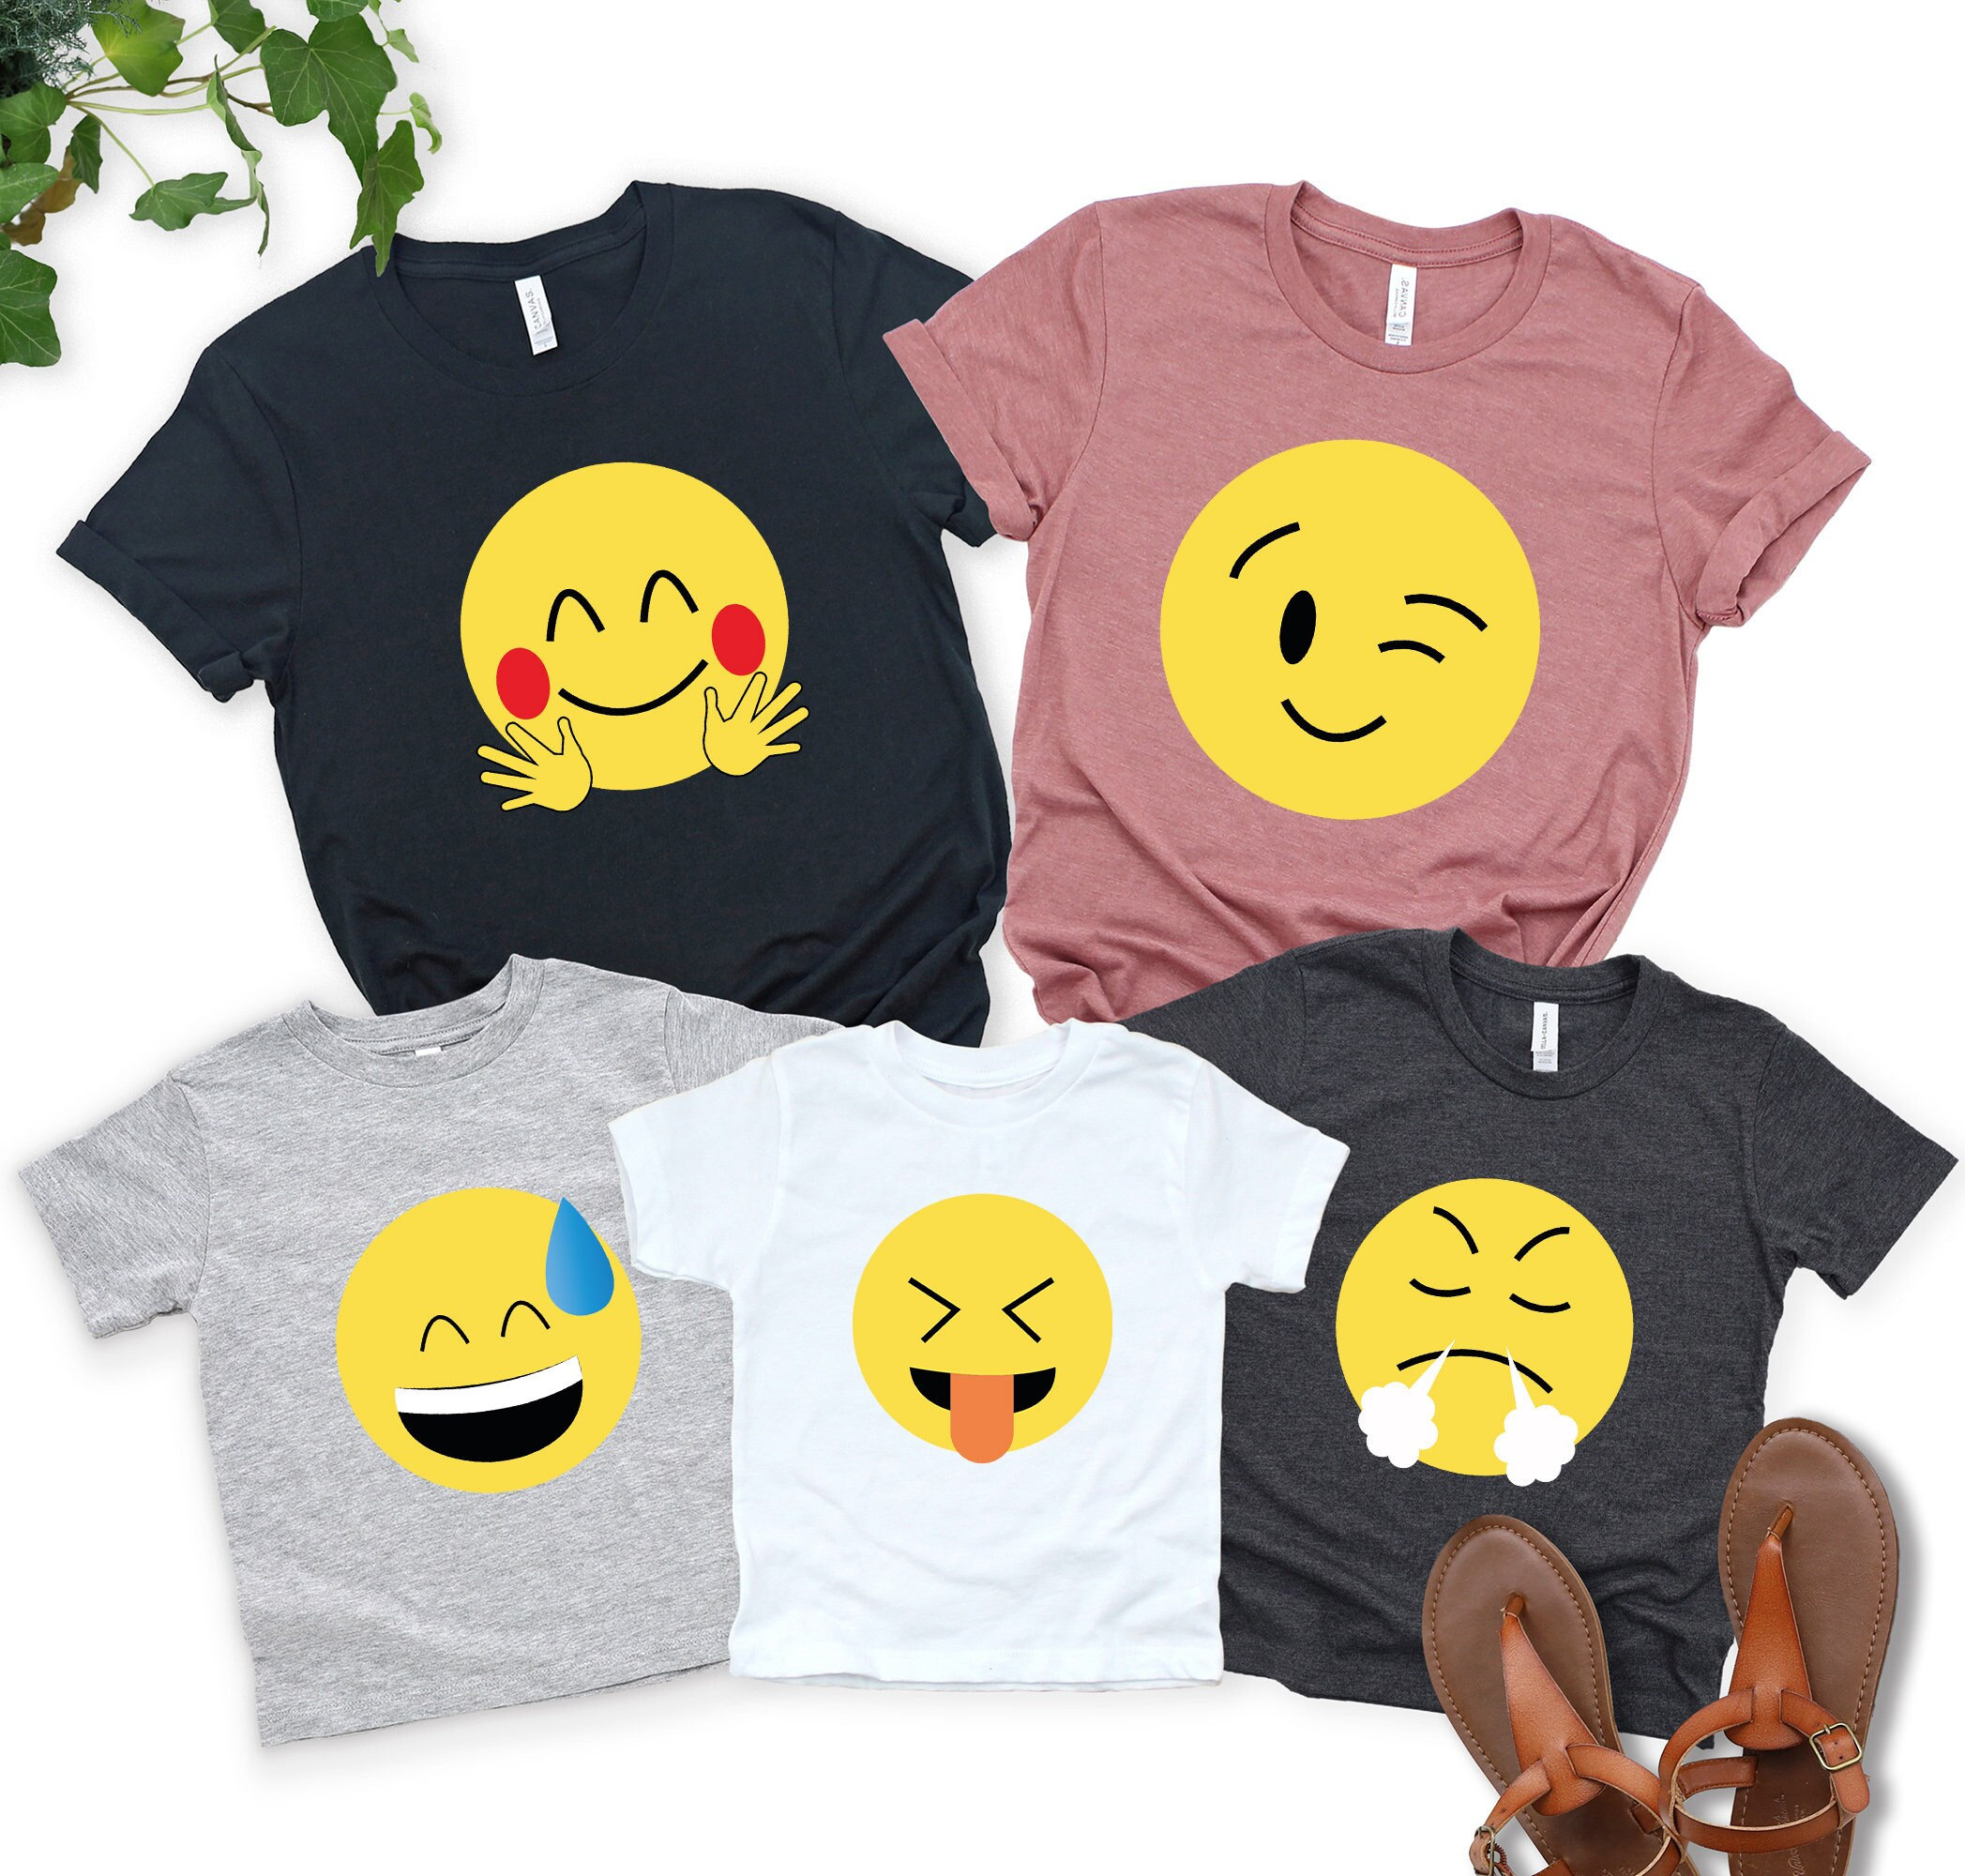 13 Pack Printable Emoji Iron on Transfers for Shirts Emoji 